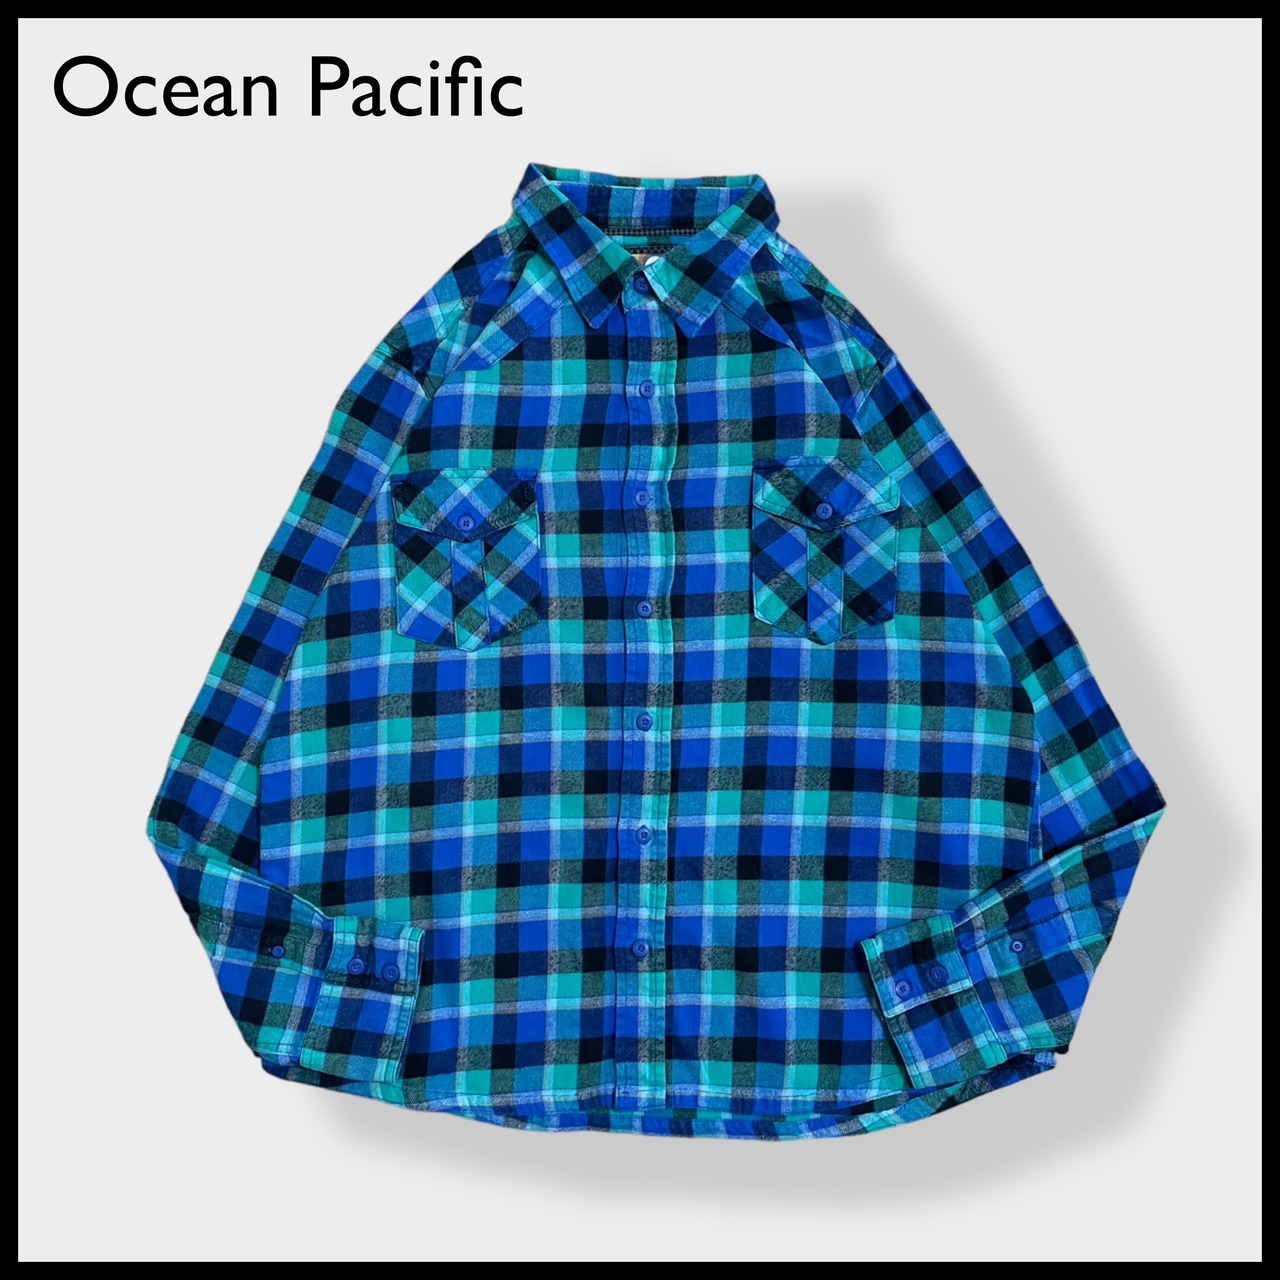 【Ocean Pacific】OP コットン ネルシャツ 長袖 フランネルシャツ カジュアルシャツ チェック柄 柄シャツ XL オーシャンパシフィック US古着